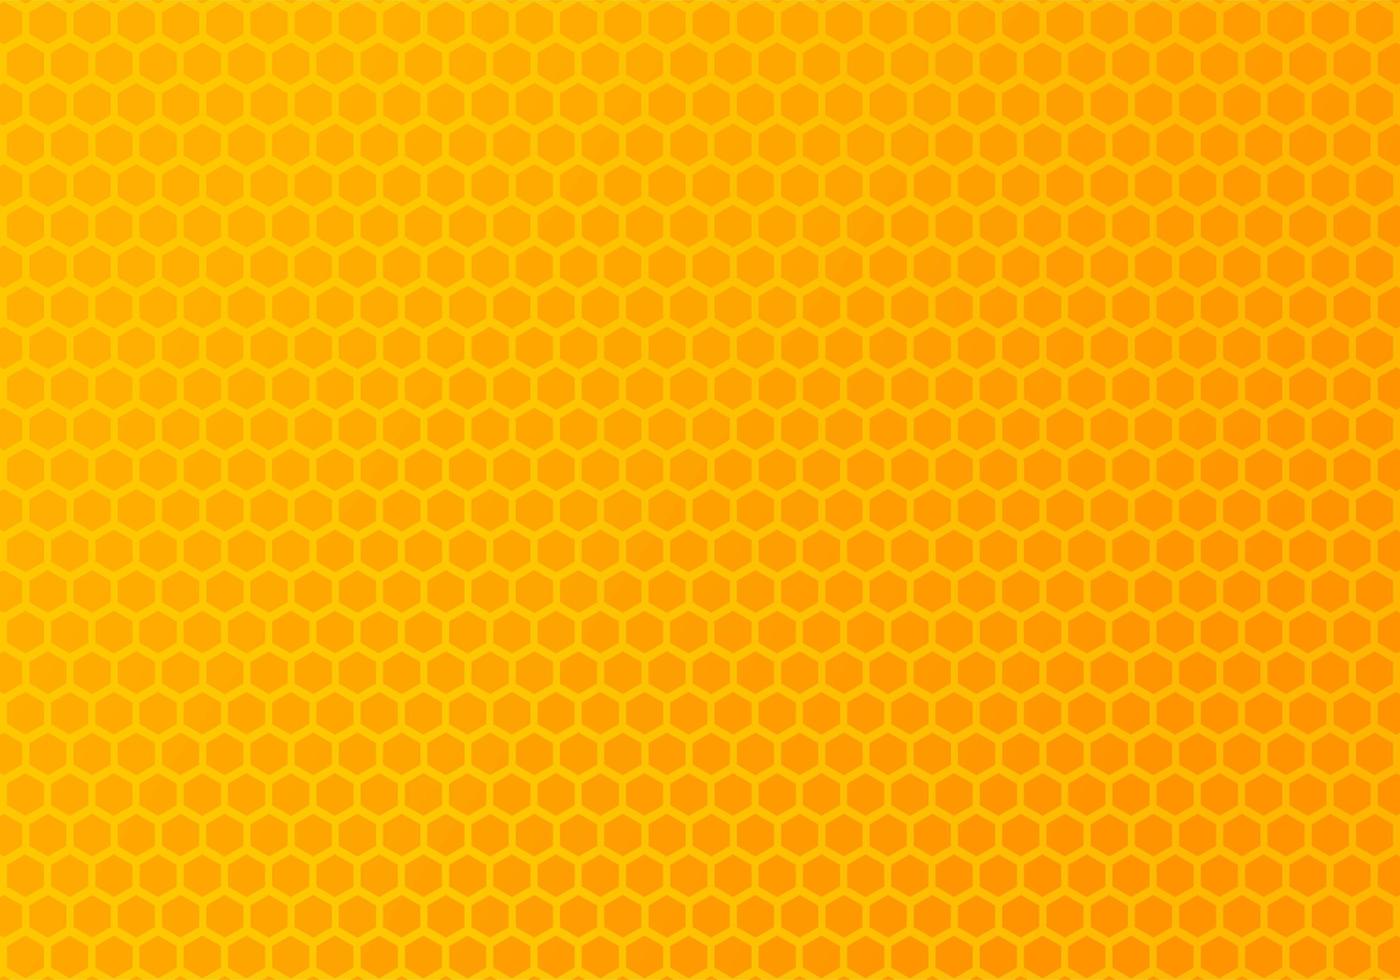 Orange and yellow hexagonal pattern vector